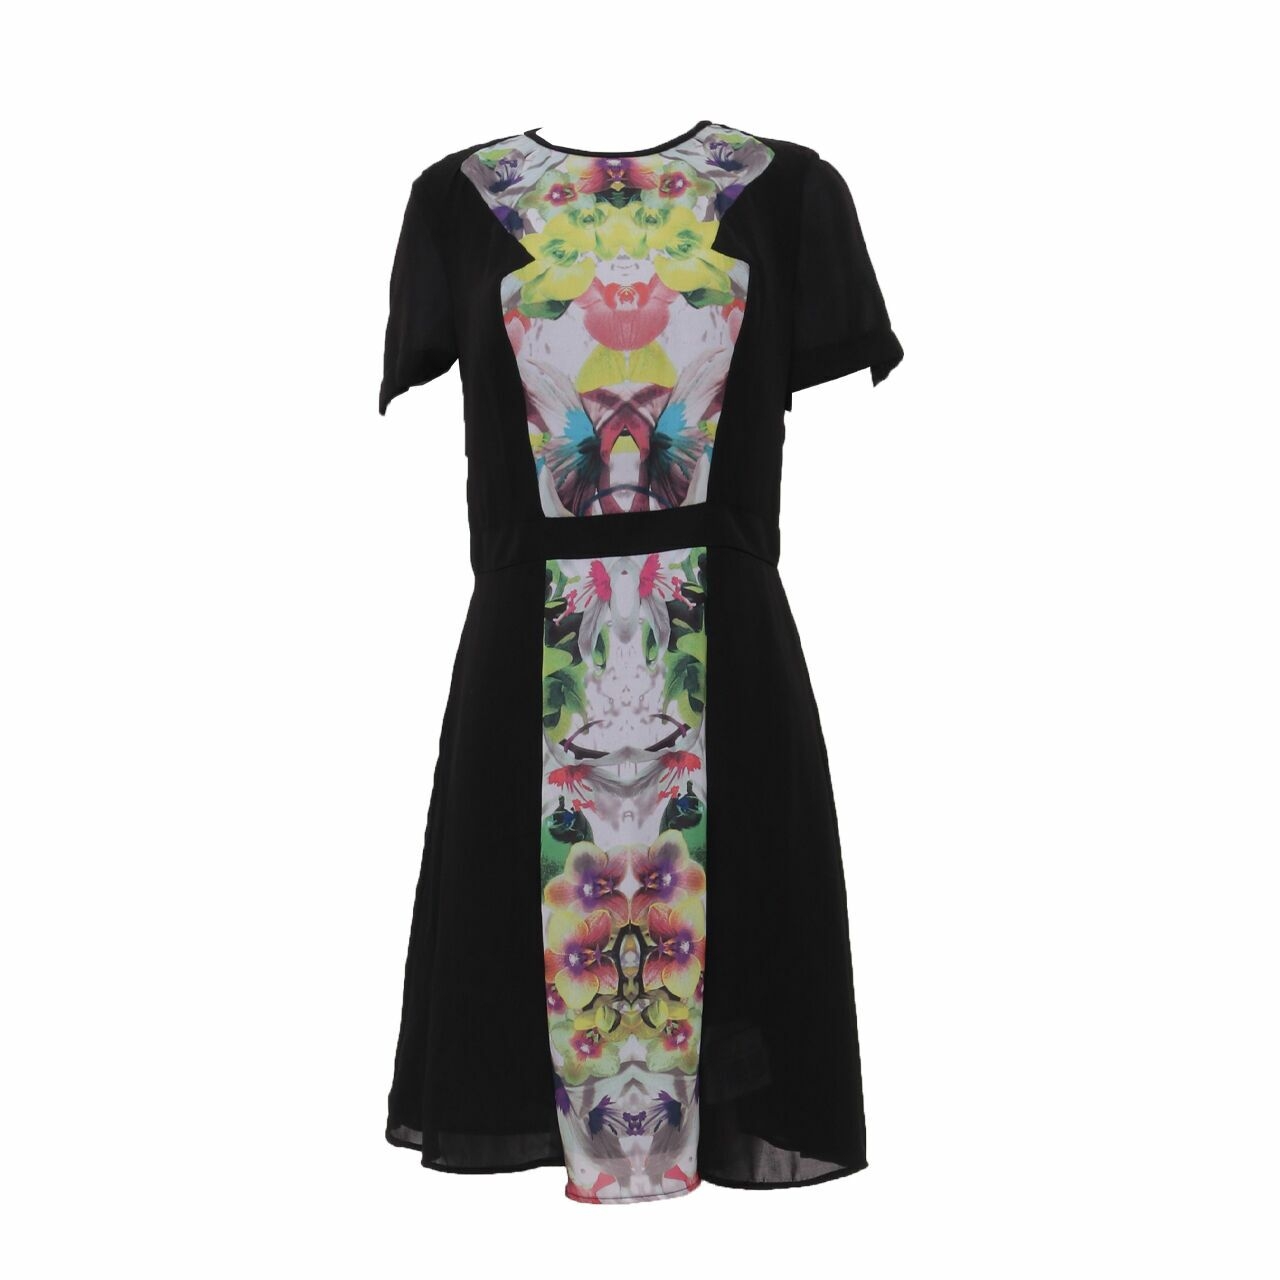 Prabal Gurung For Target Black Floral Mini Dress